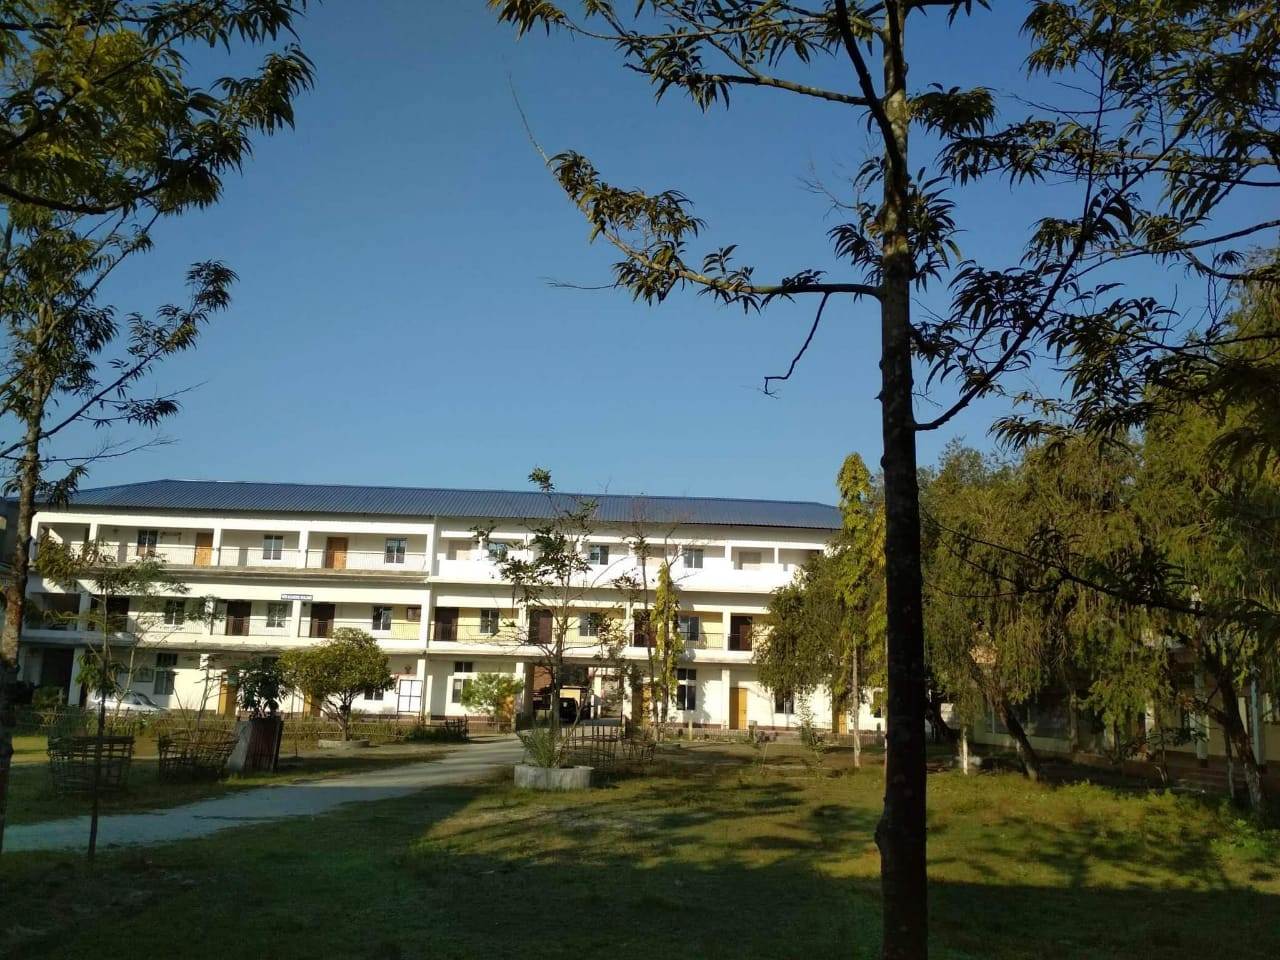 Saraighat College